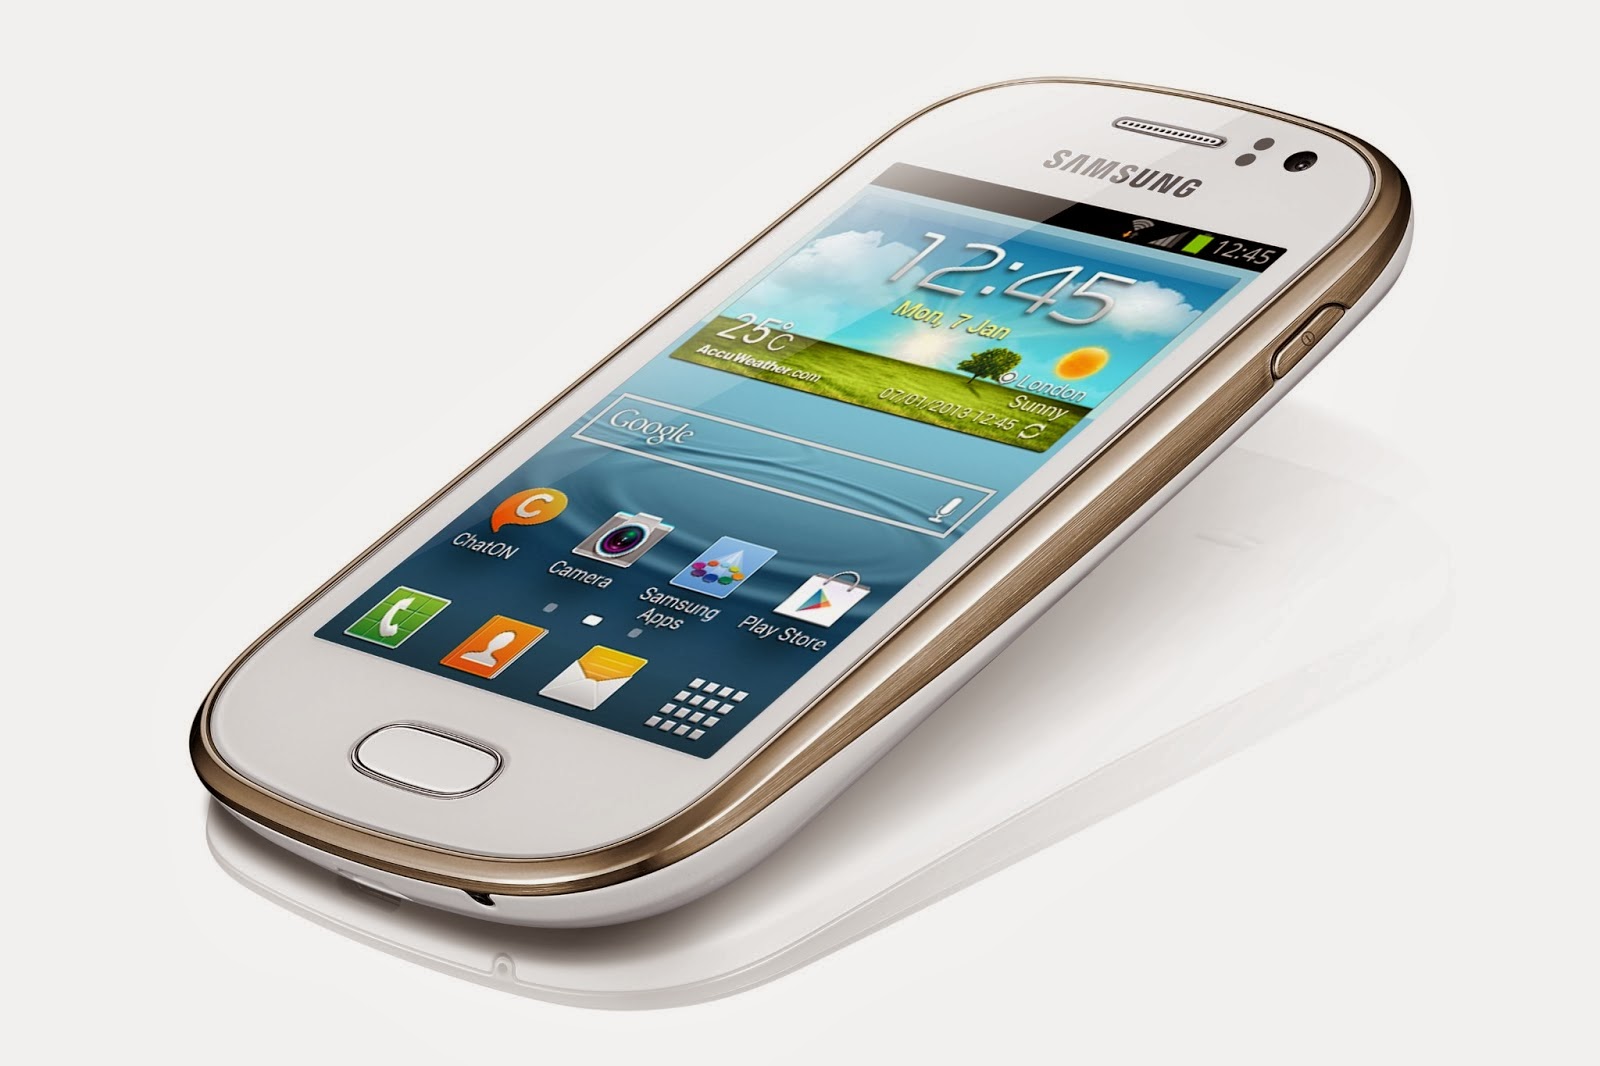 Harga Hp Samsung Galaxy Fame Terbaru Update 2015  UNIVERSALTEKNO